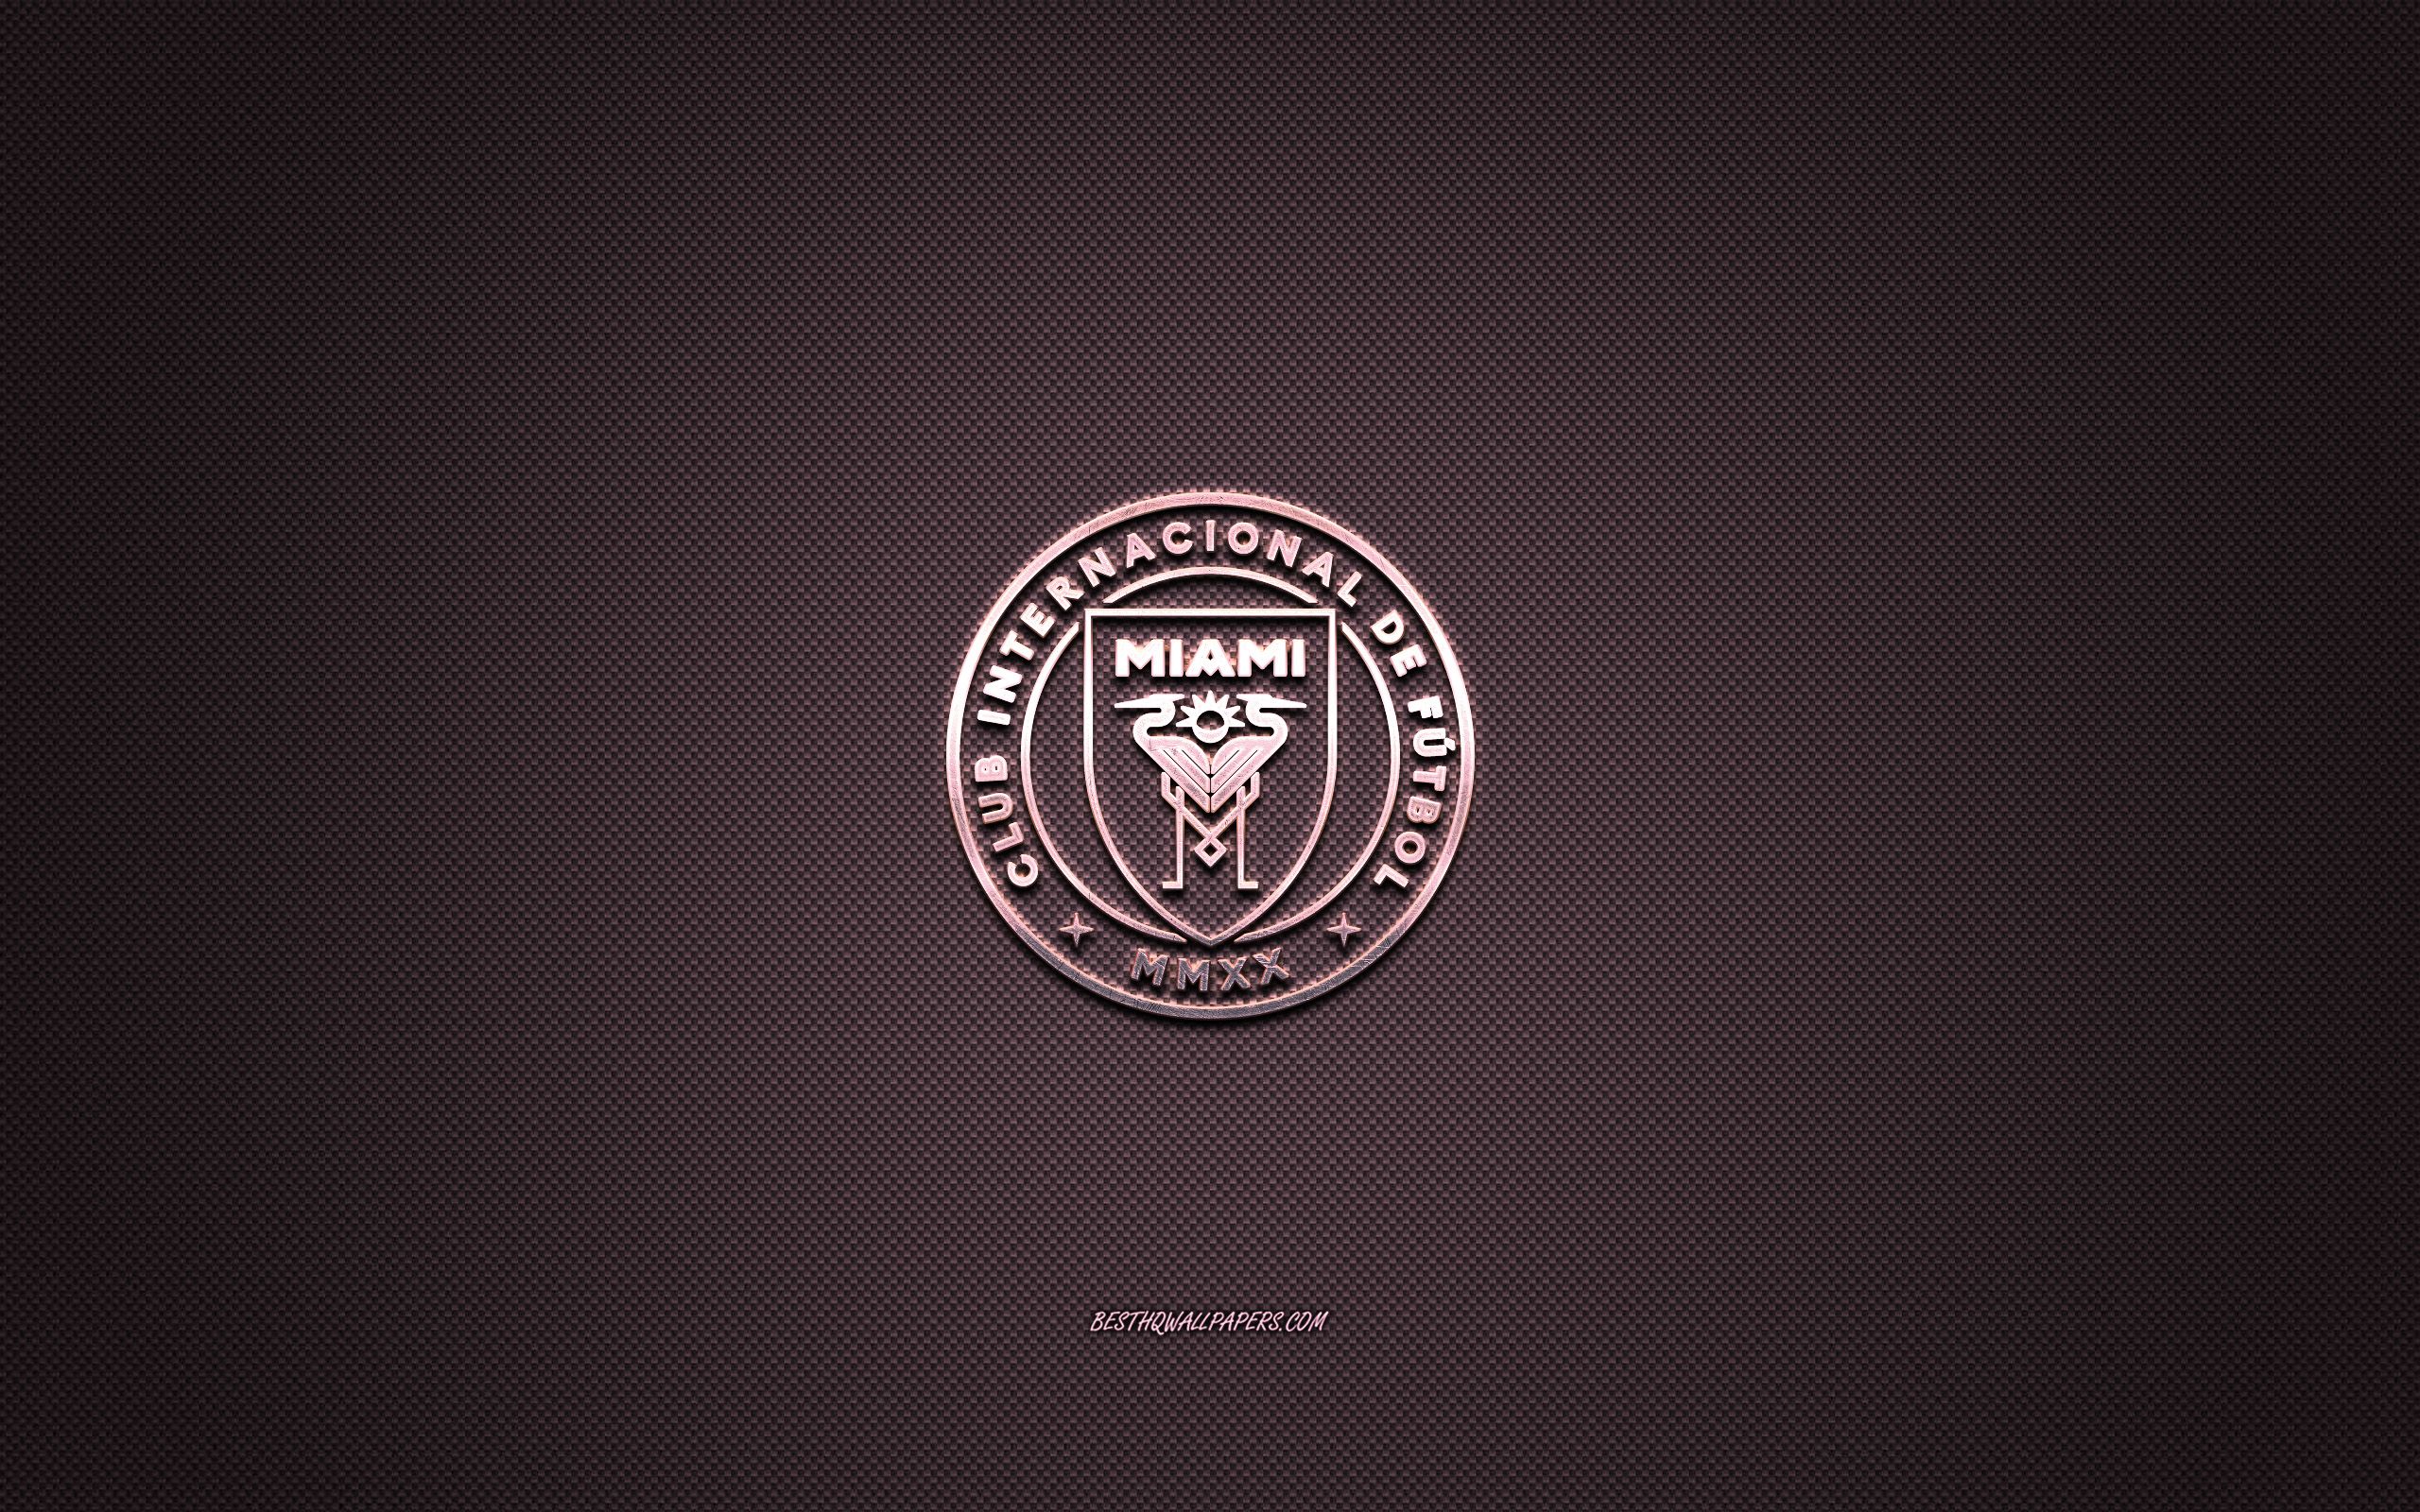 Download wallpaper Inter Miami CF logo, american football club